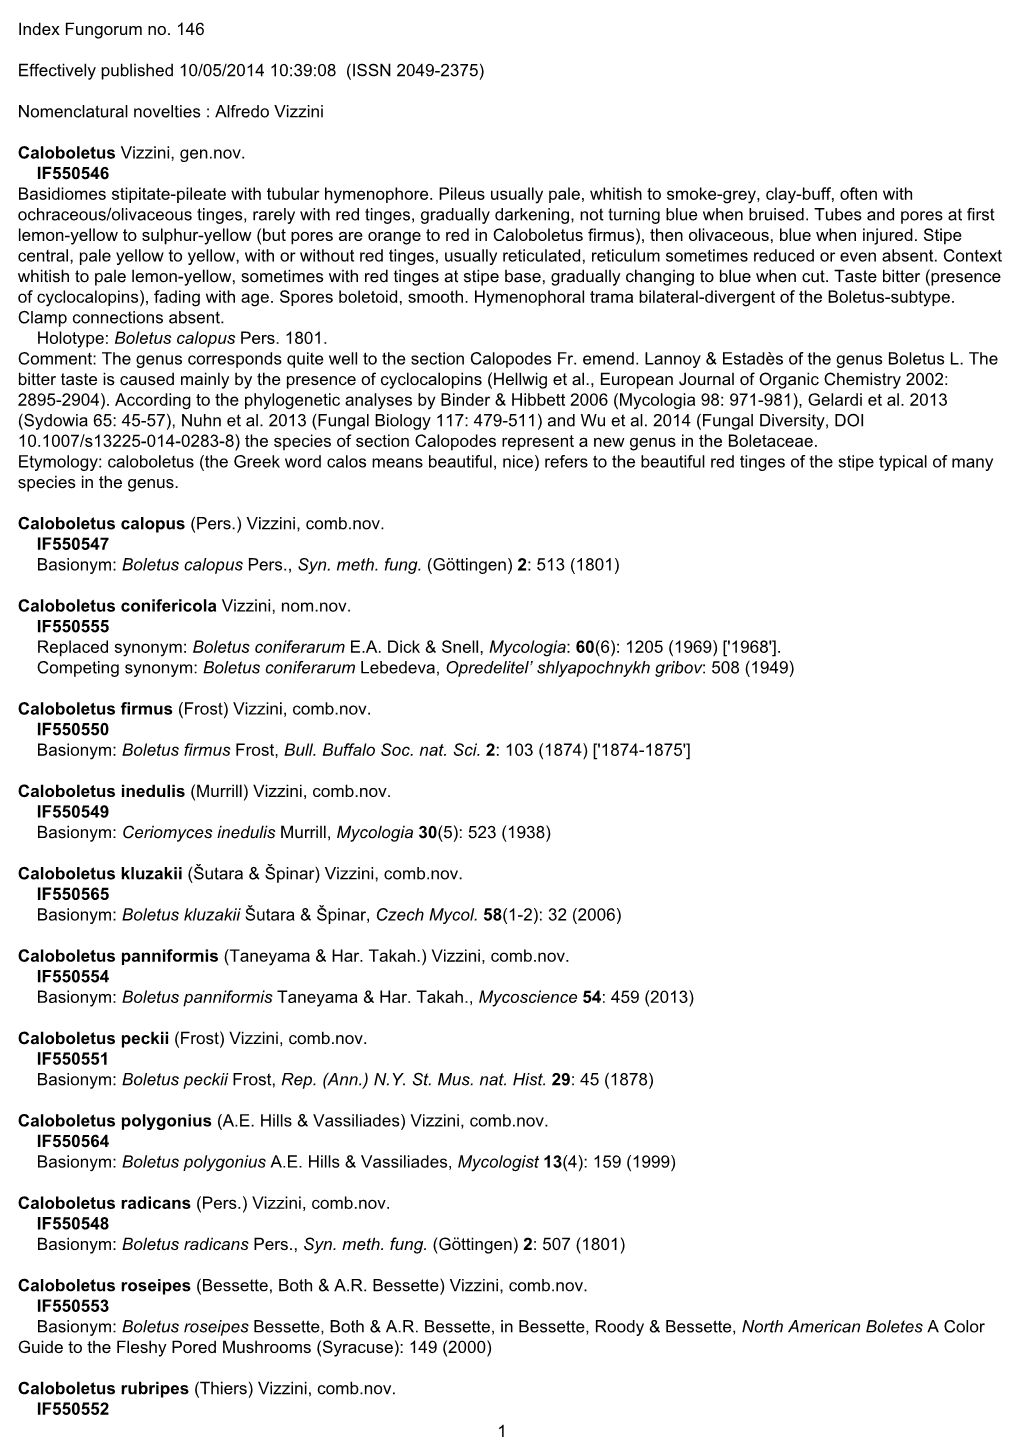 Index Fungorum No. 146 Effectively Published 10/05/2014 10:39:08 (ISSN 2049-2375) Nomenclatural Novelties : Alfredo